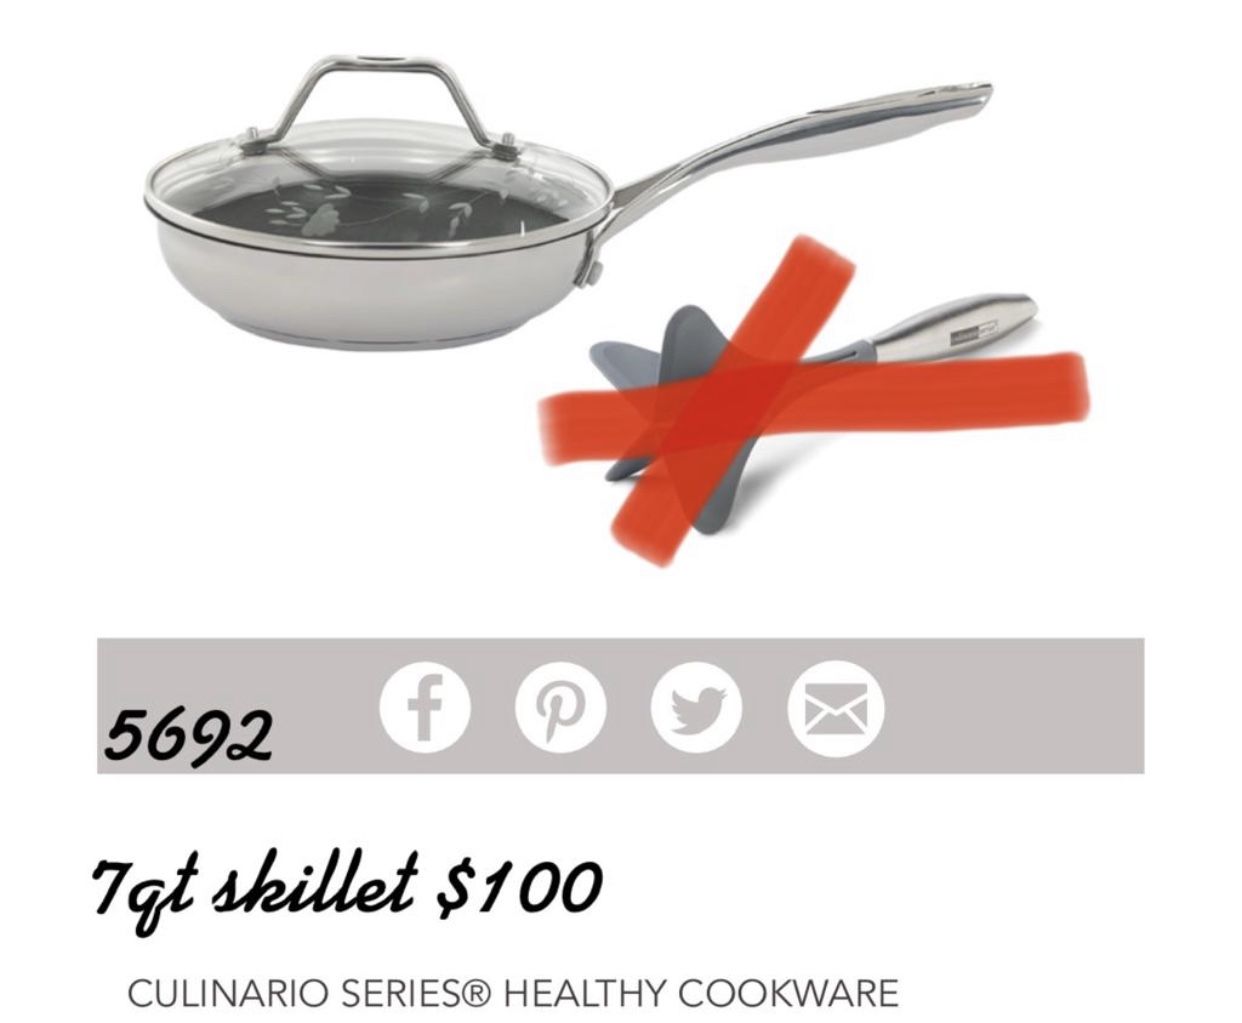 Princess house #5692 non stick 7QT healthy cookware skillet